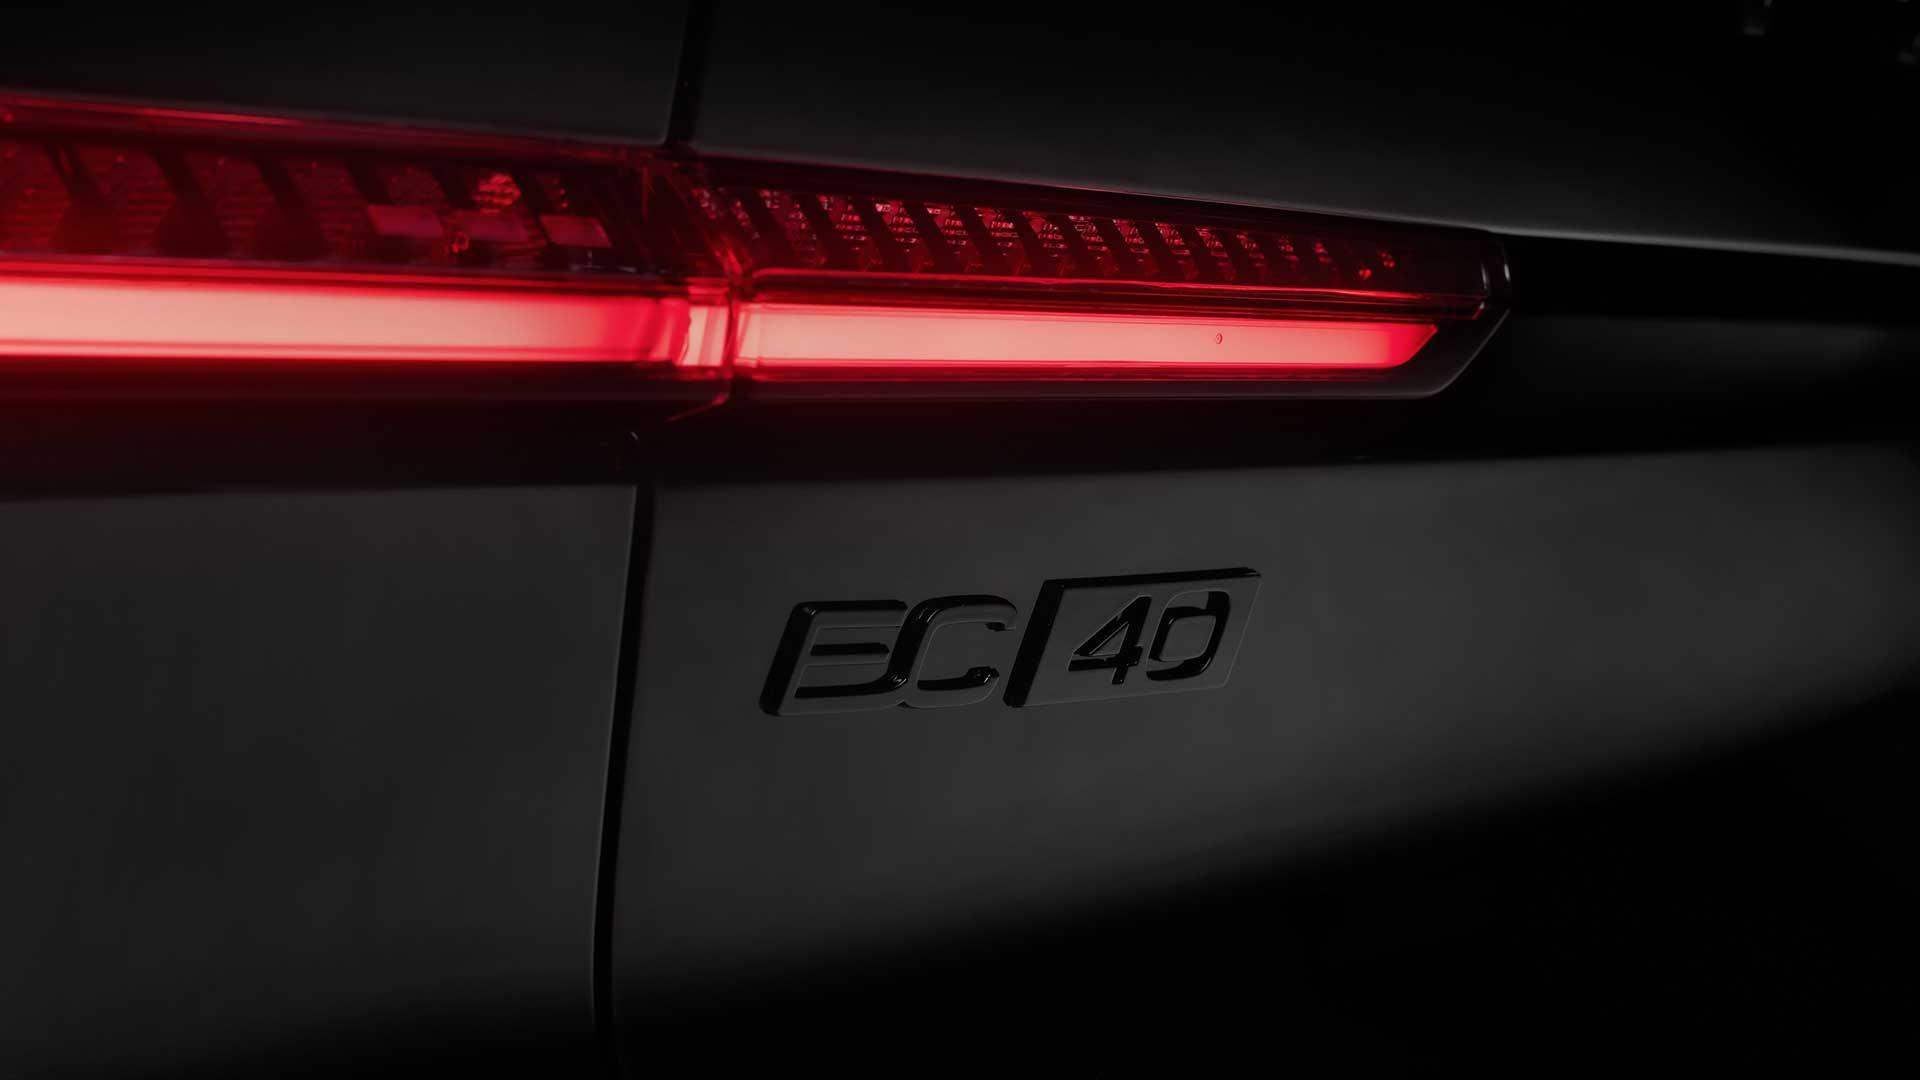 Volvo EC40 badge